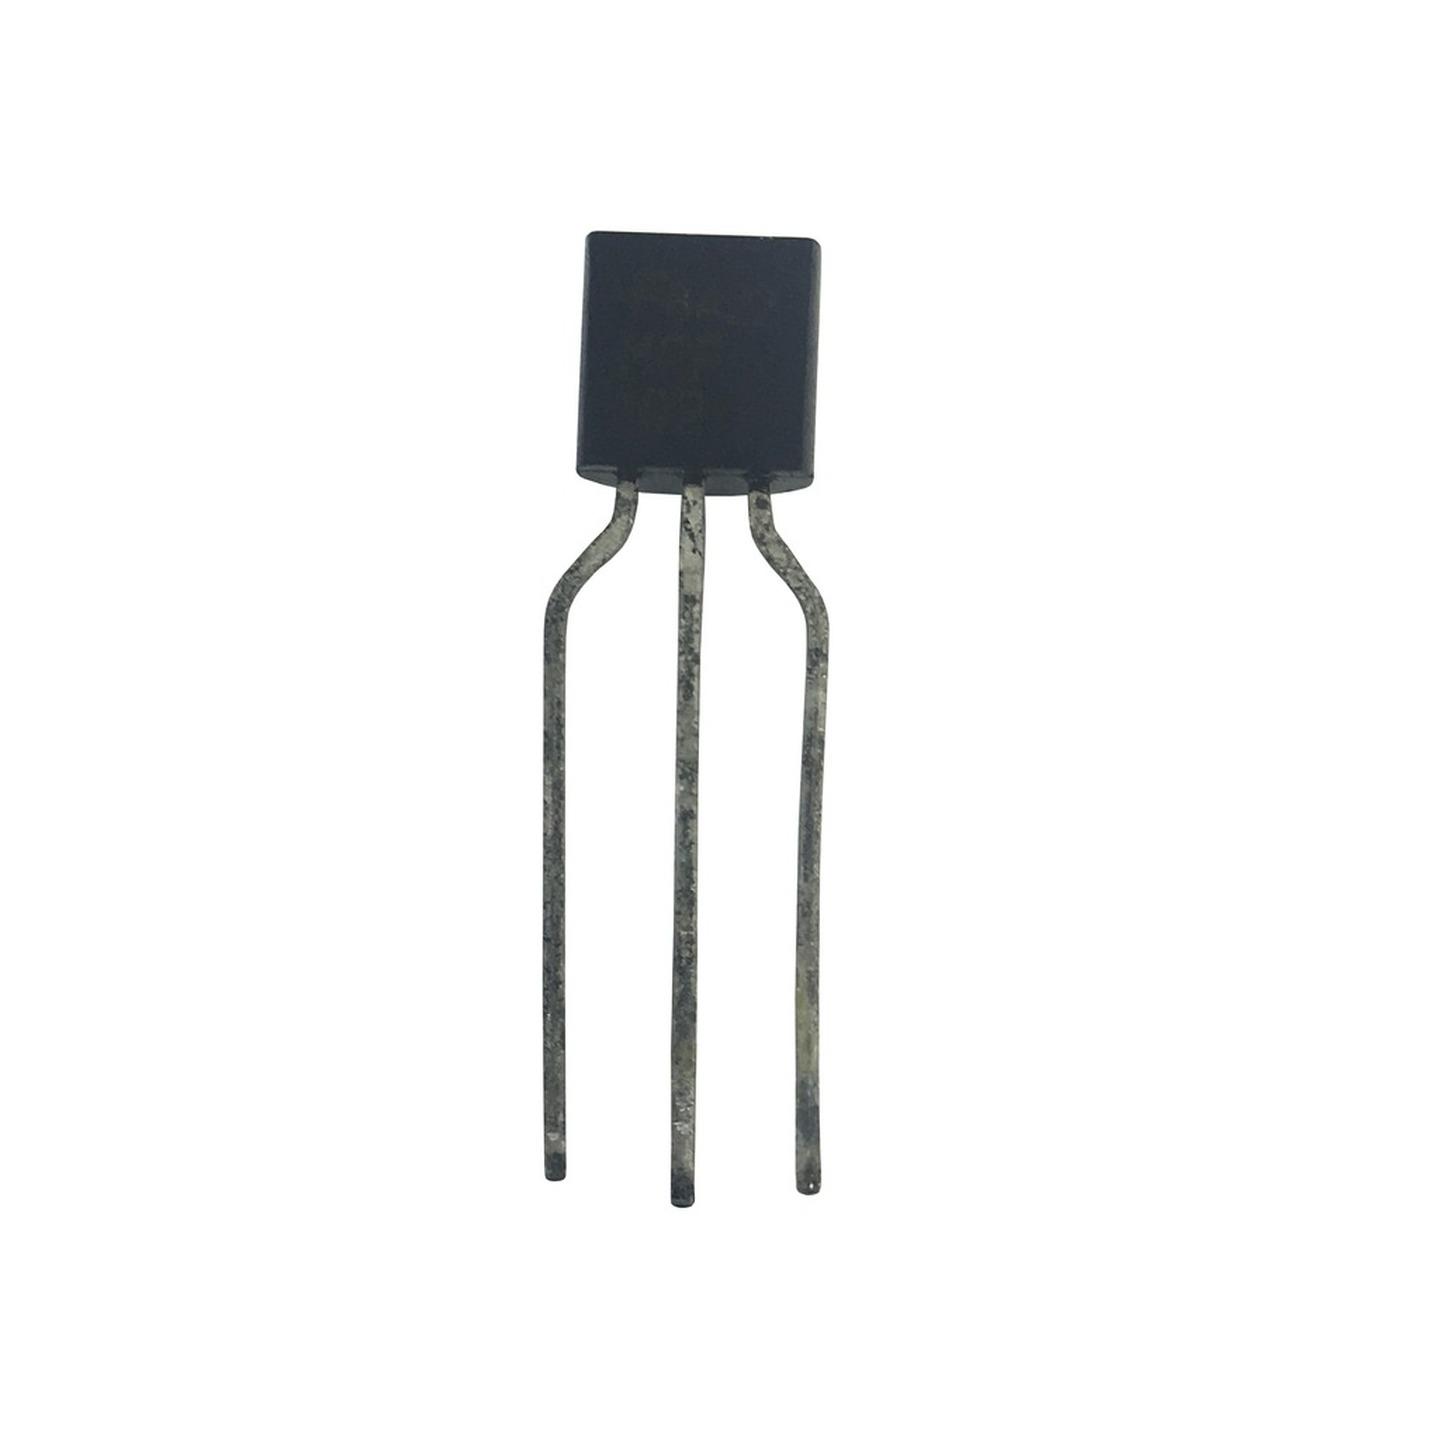 LM336-2.5 2.5V Voltage Reference TO-92 case